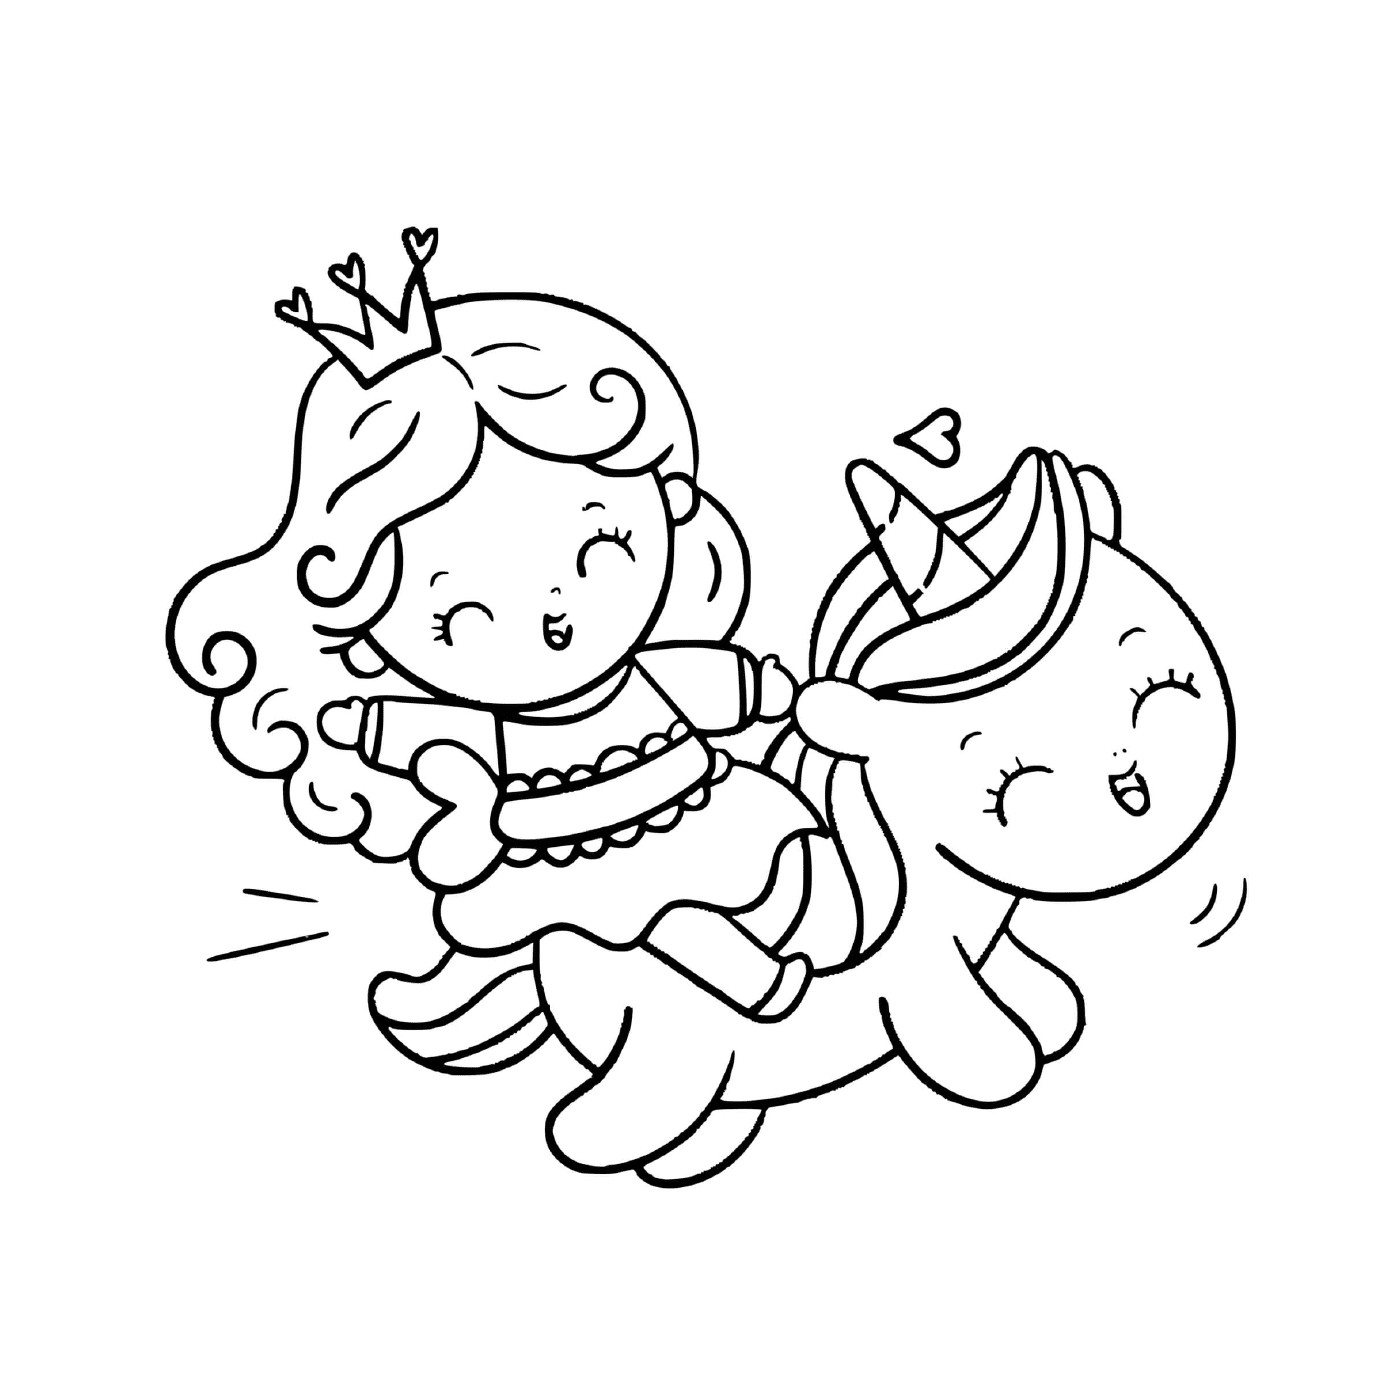  Princess unicorn kawaii with hearts 